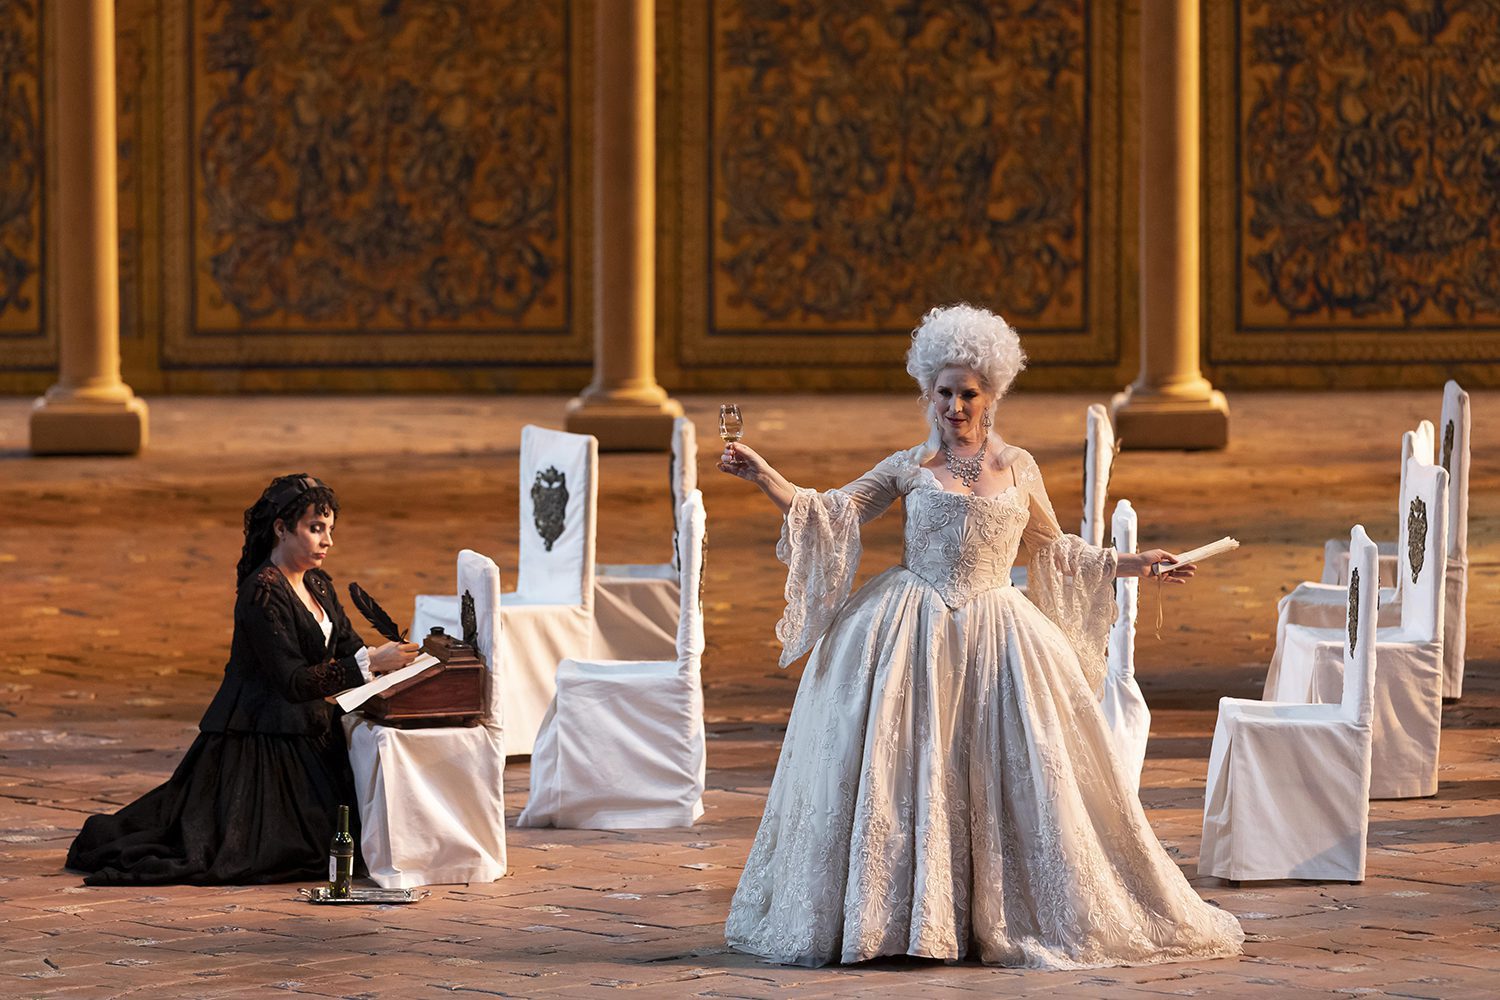 Le nozze di Figaro ©Miguel Lorenzo Mikel Ponce Les Arts (3)